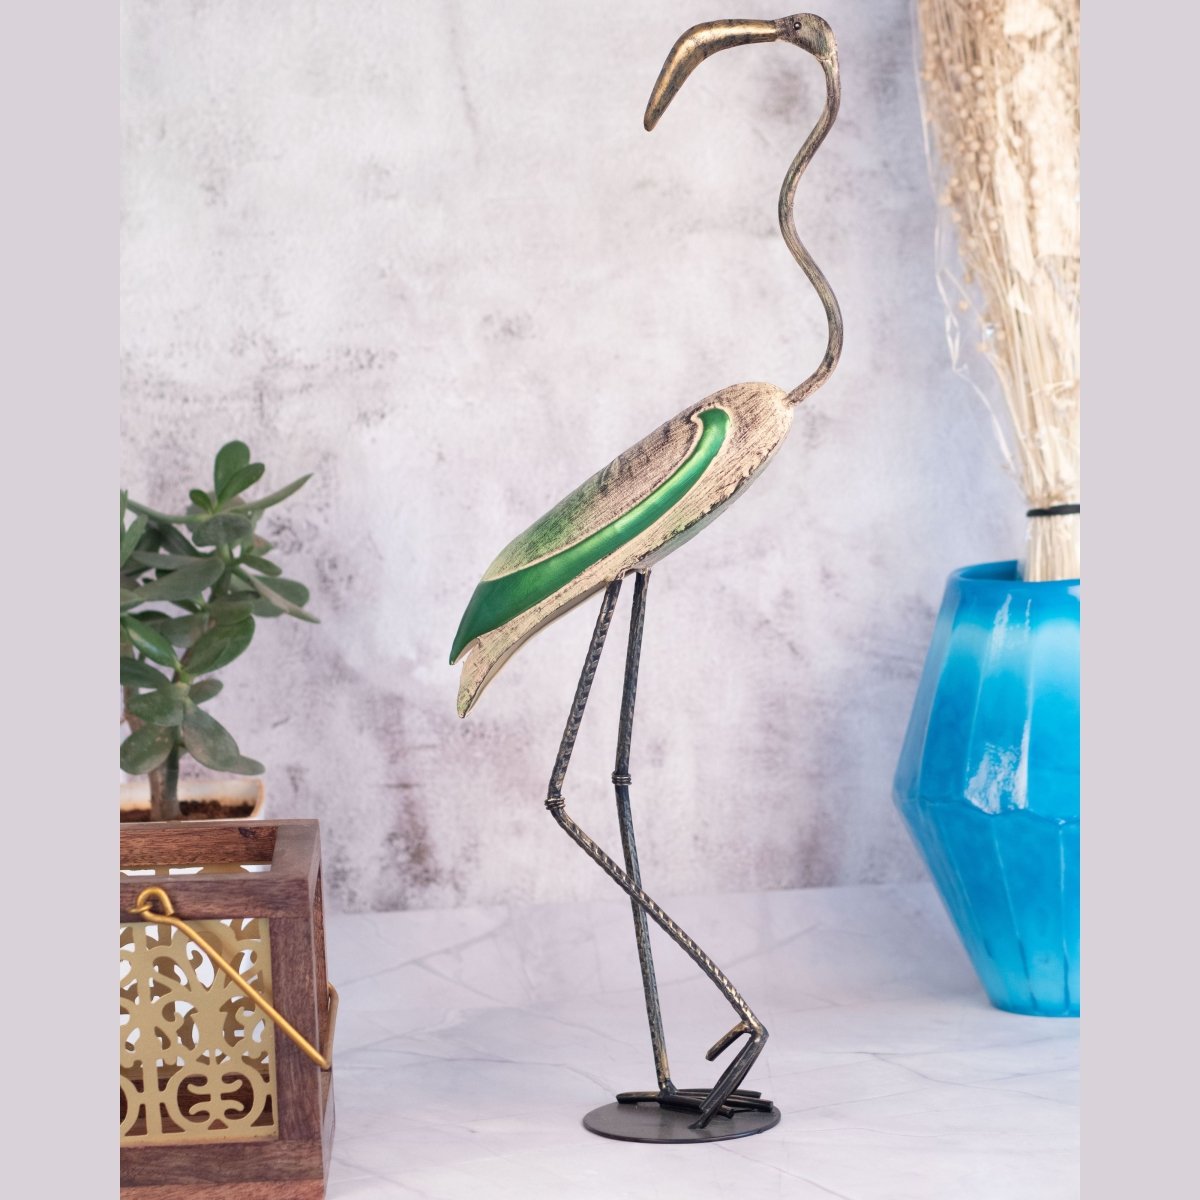 Kezevel Metal Birds Table Decor - Bird Figurines Statue in Antique Golden Green Finish, Metal Showpieces for Home Decor